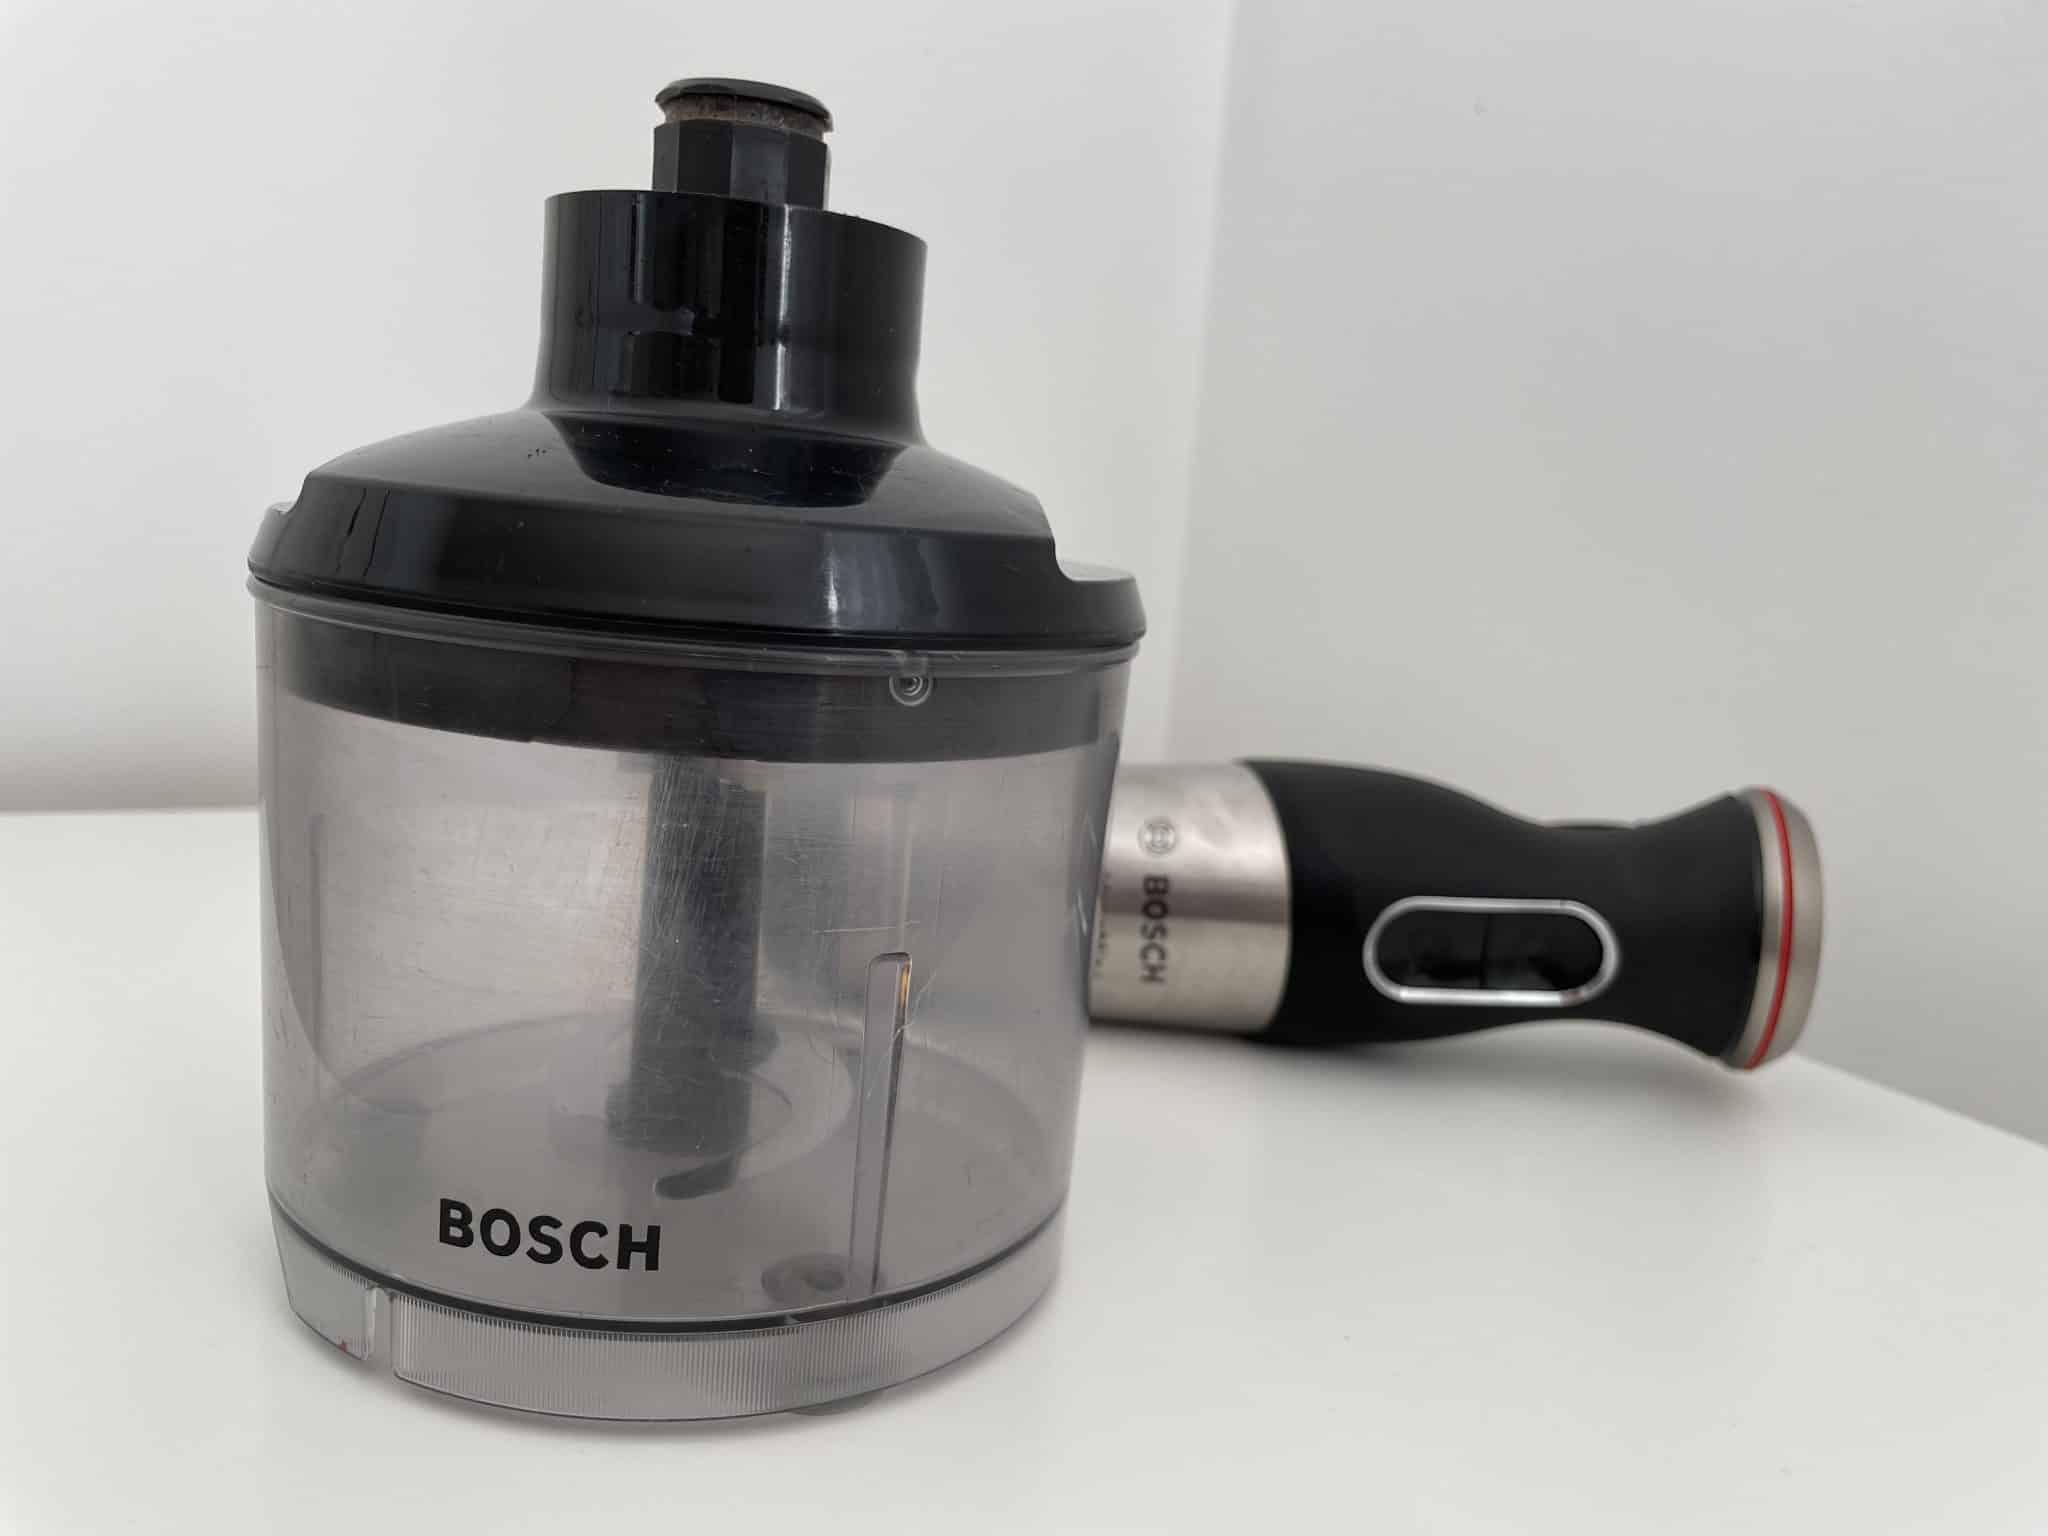 mały rozdrabniacz do blendera kuchennego Bosch